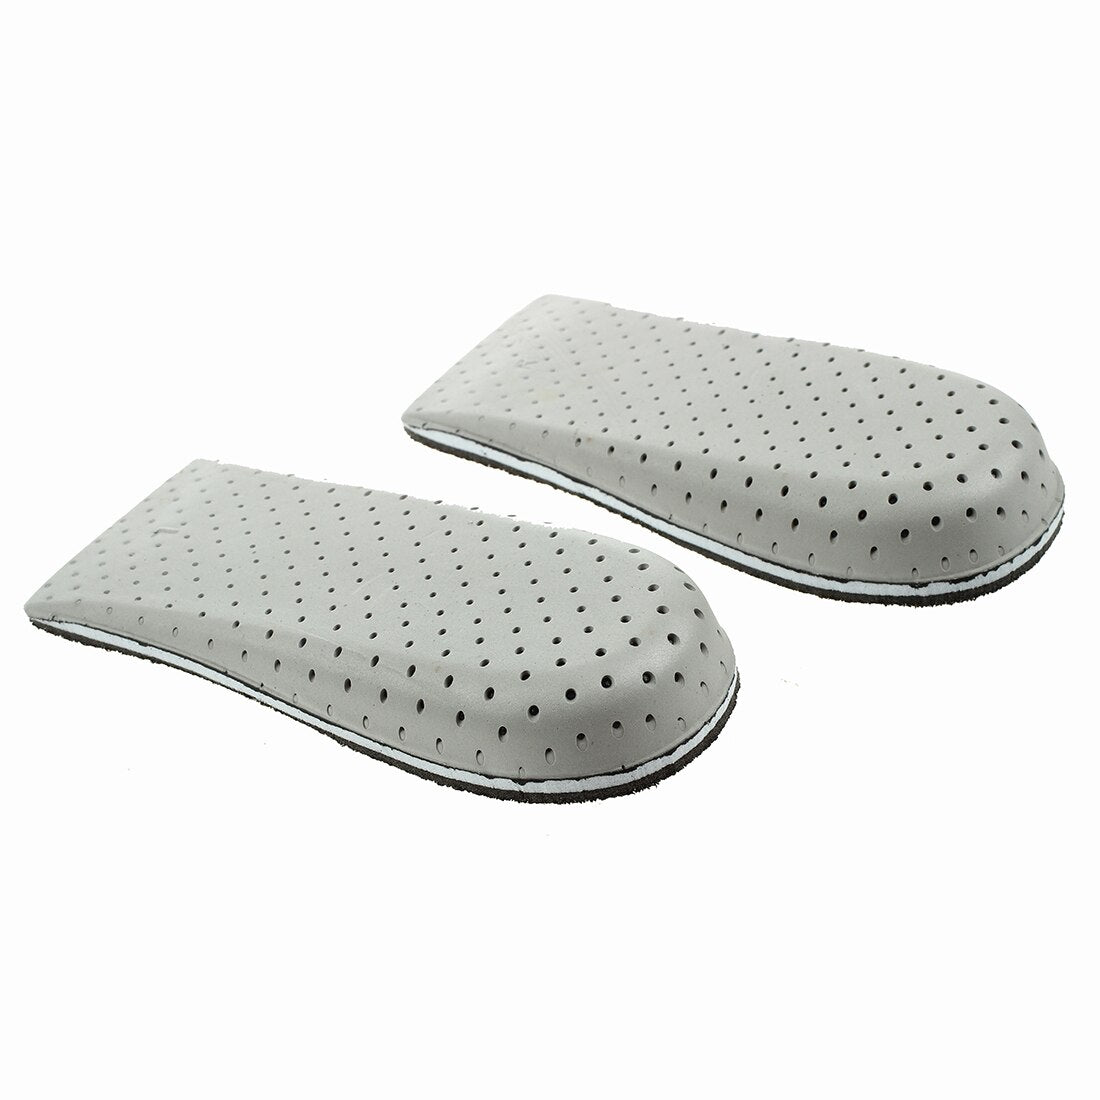 Hot-Men Women Increase Height High Half Insoles Memory Foam Shoe Inserts Cushion Pads 2.3cm/0.9in - ebowsos